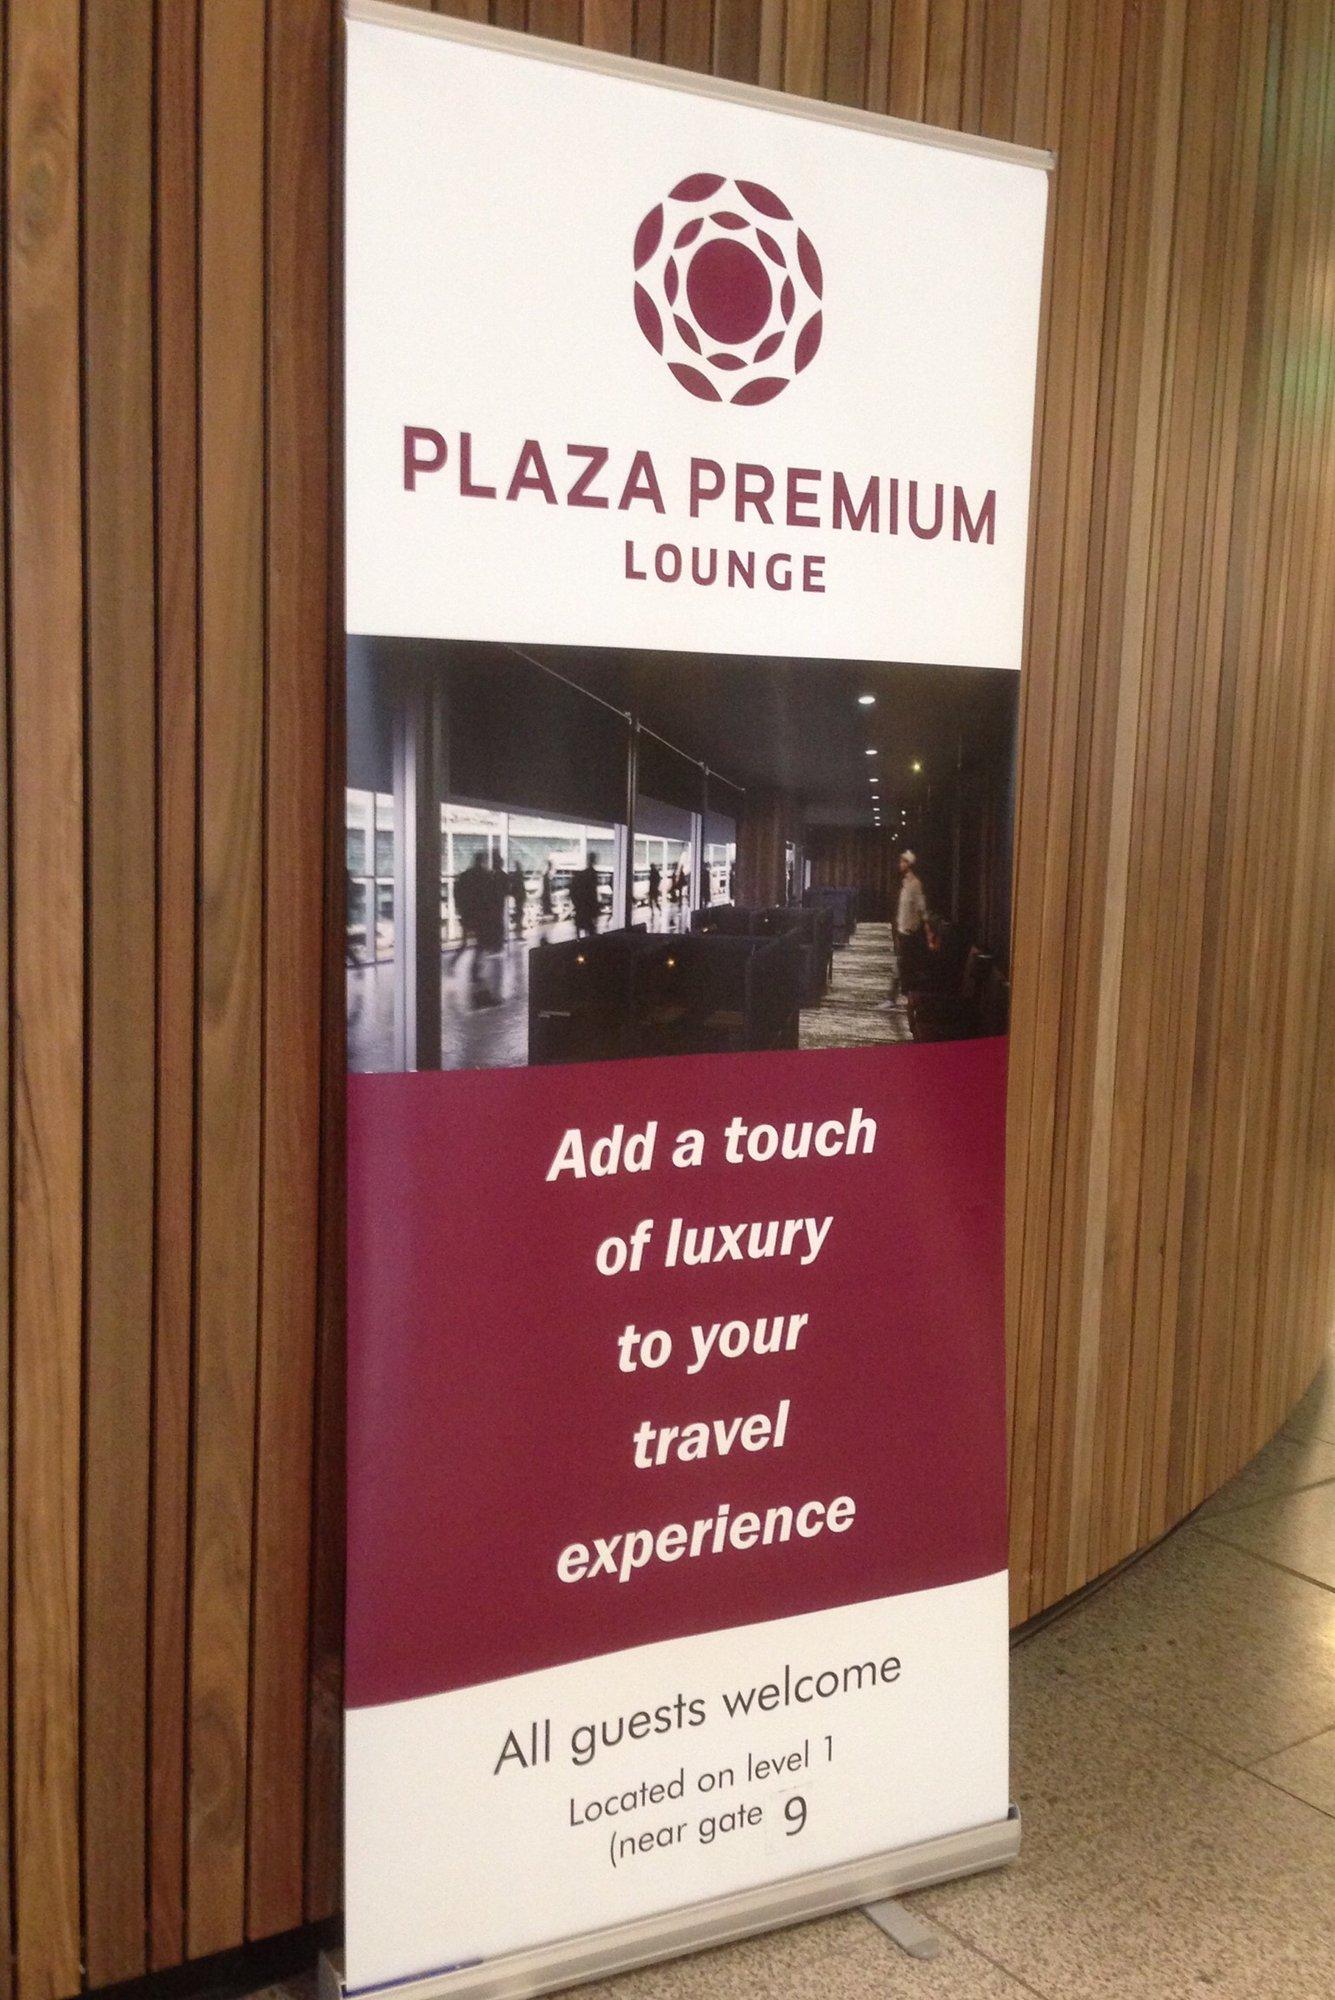 Plaza Premium Lounge image 15 of 33